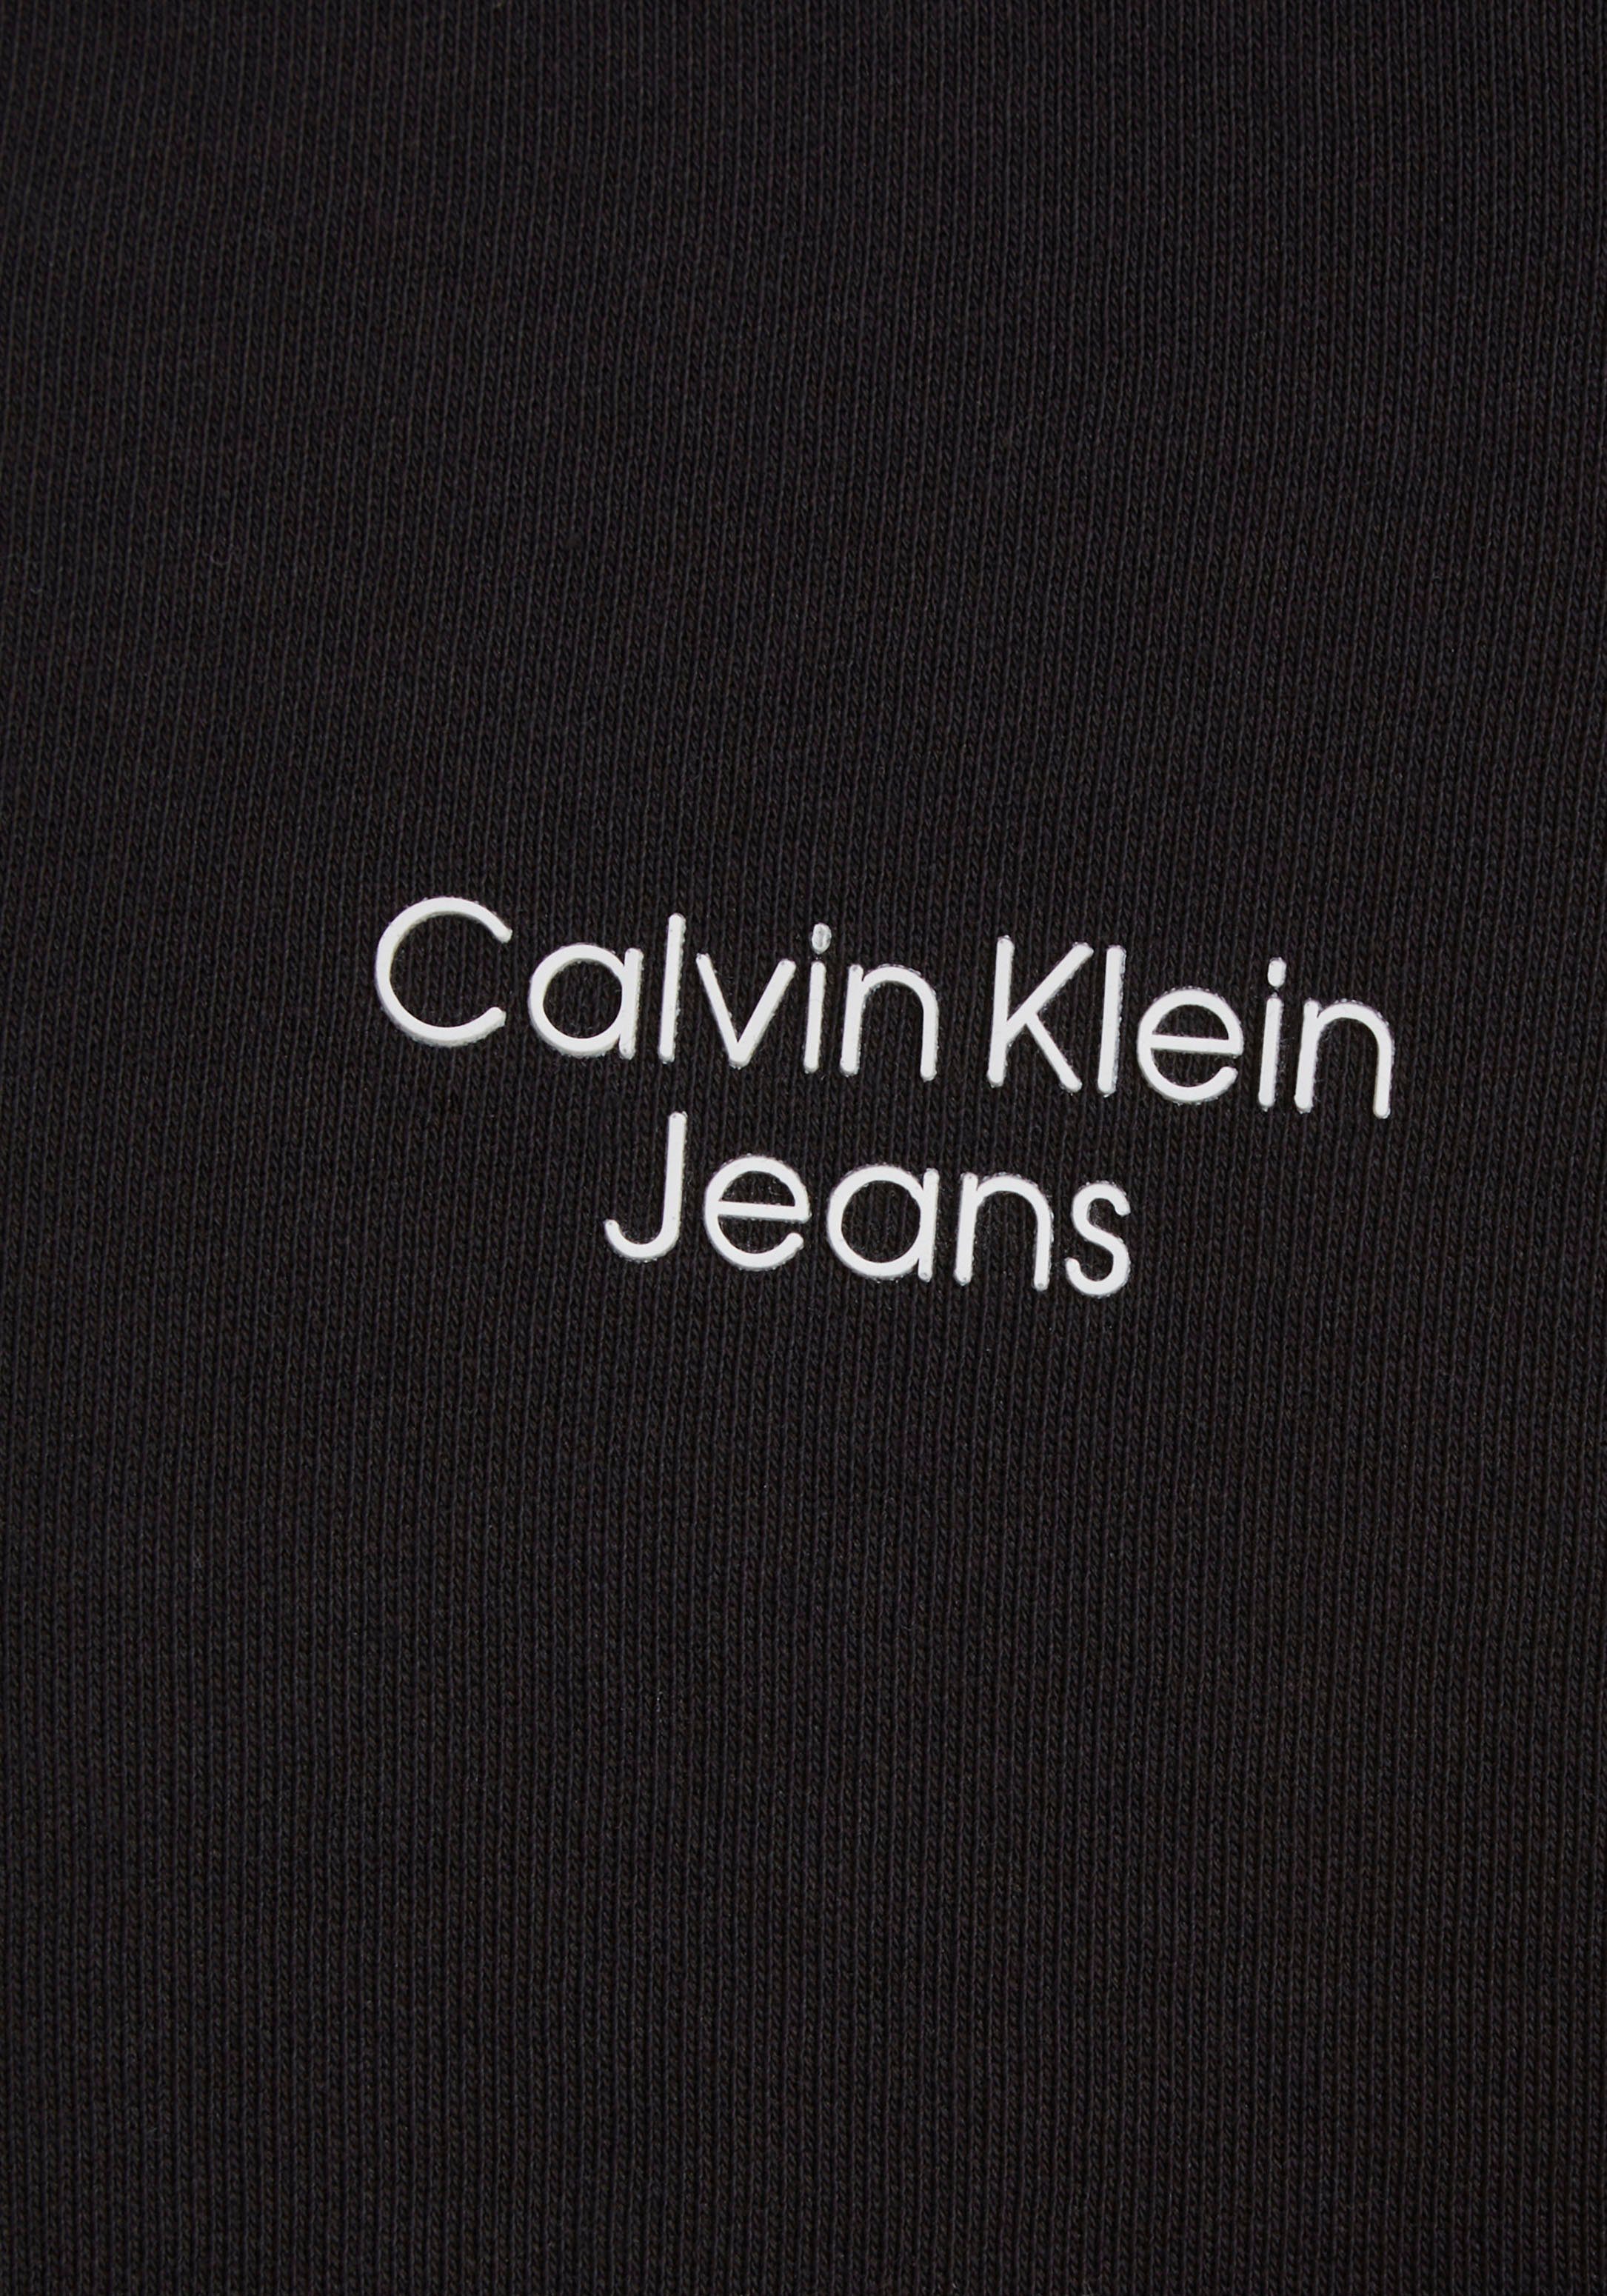 SWEATSHIRT Sweatshirt CKJ Calvin Klein STACK Jeans LOGO